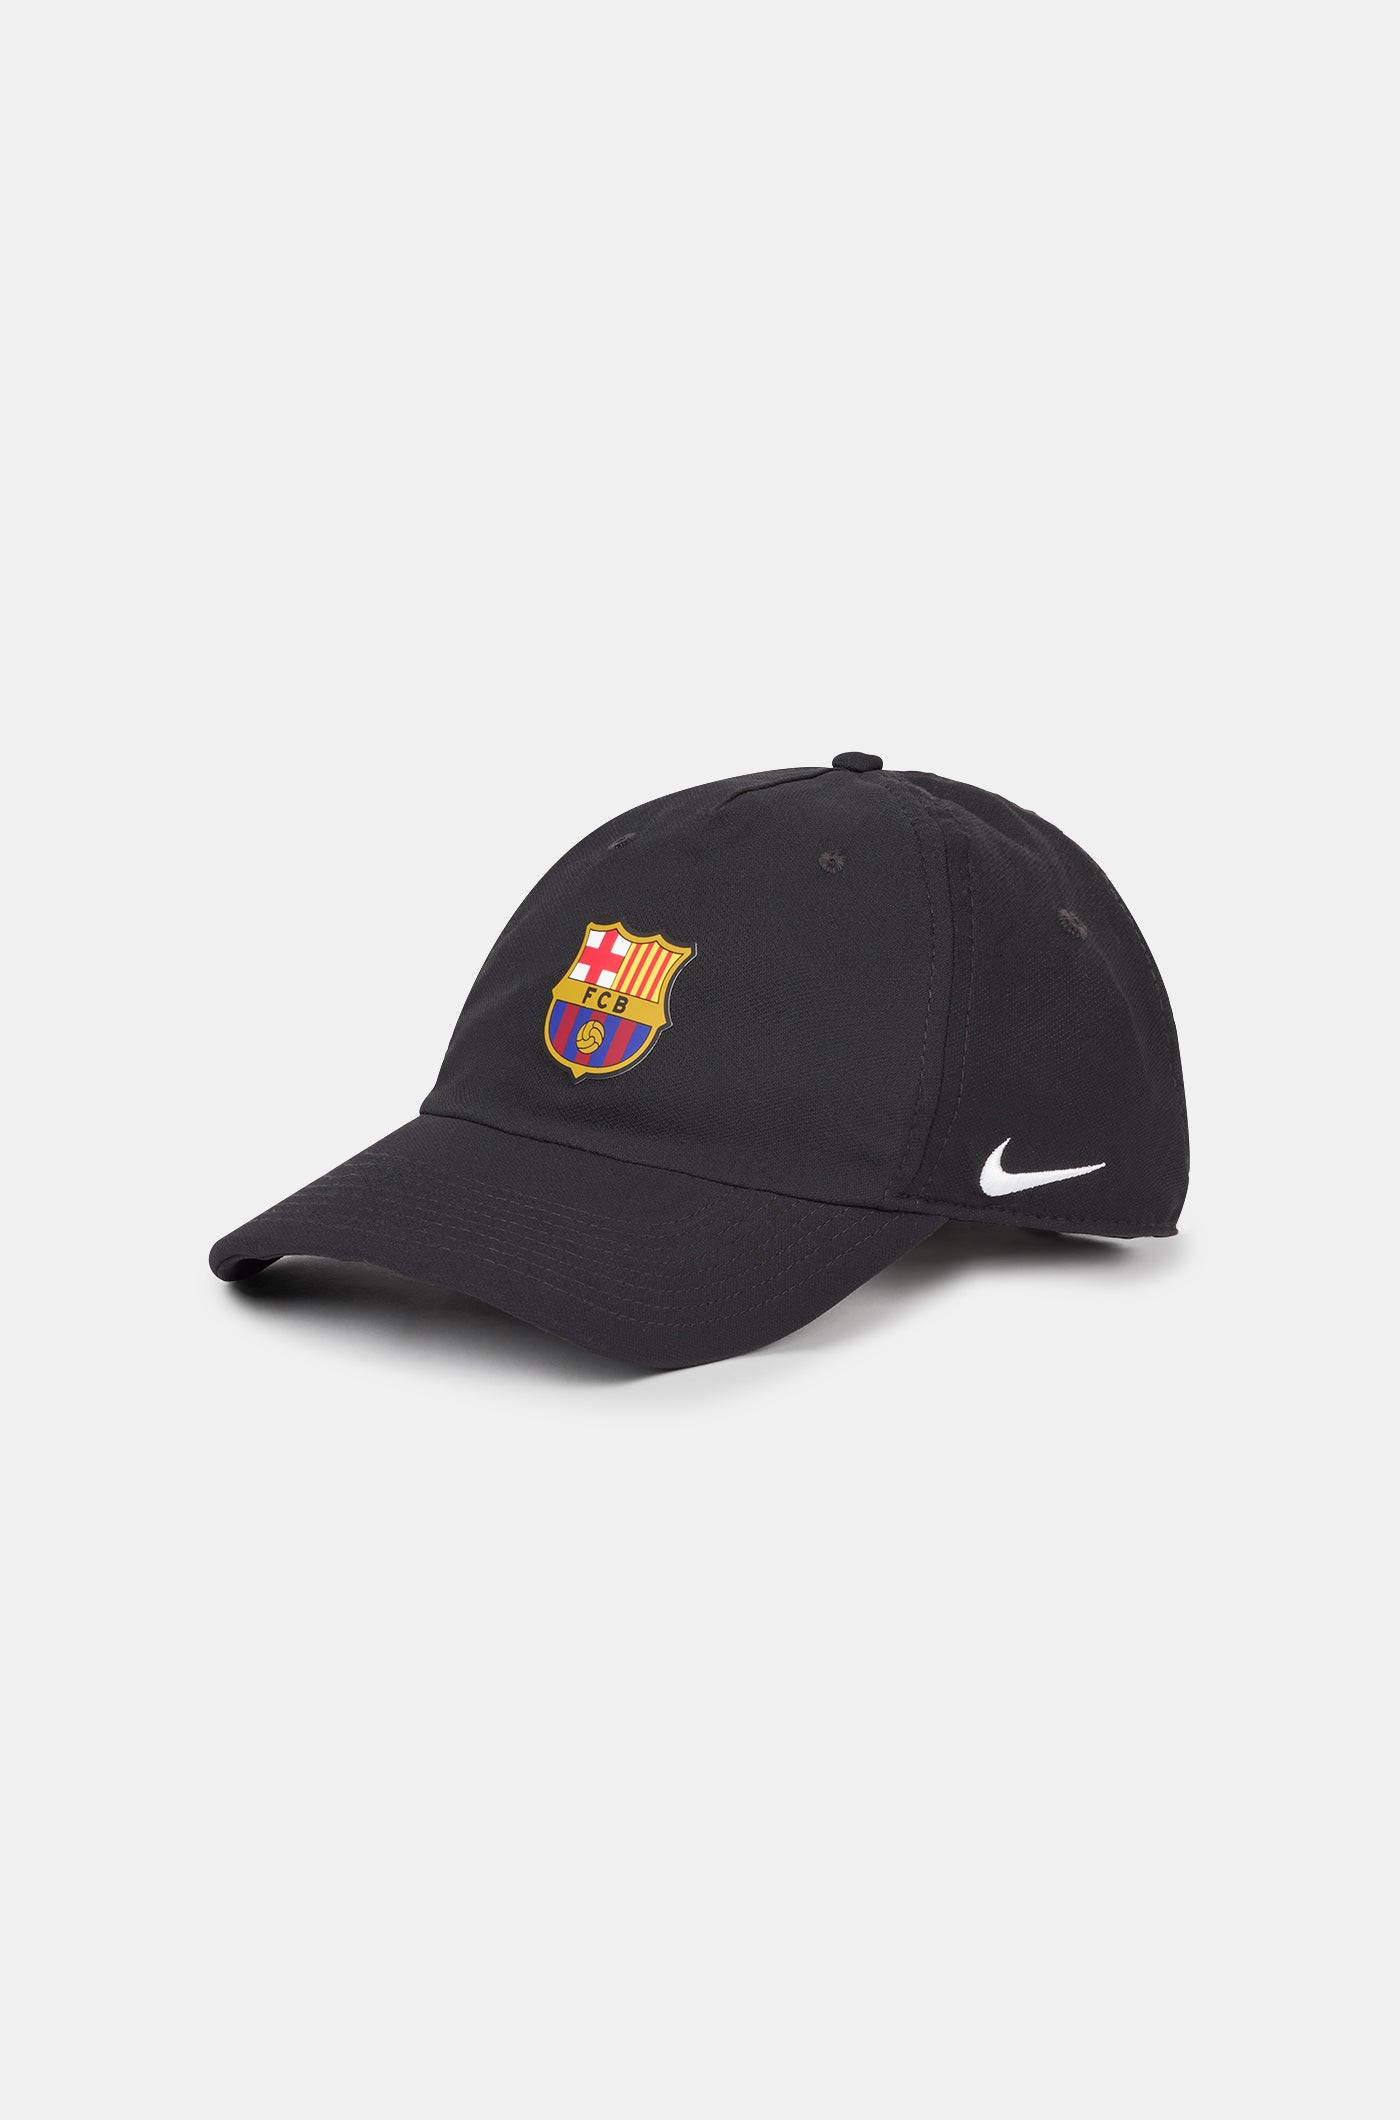 Schwarz Cap mit Wappen Barça Nike